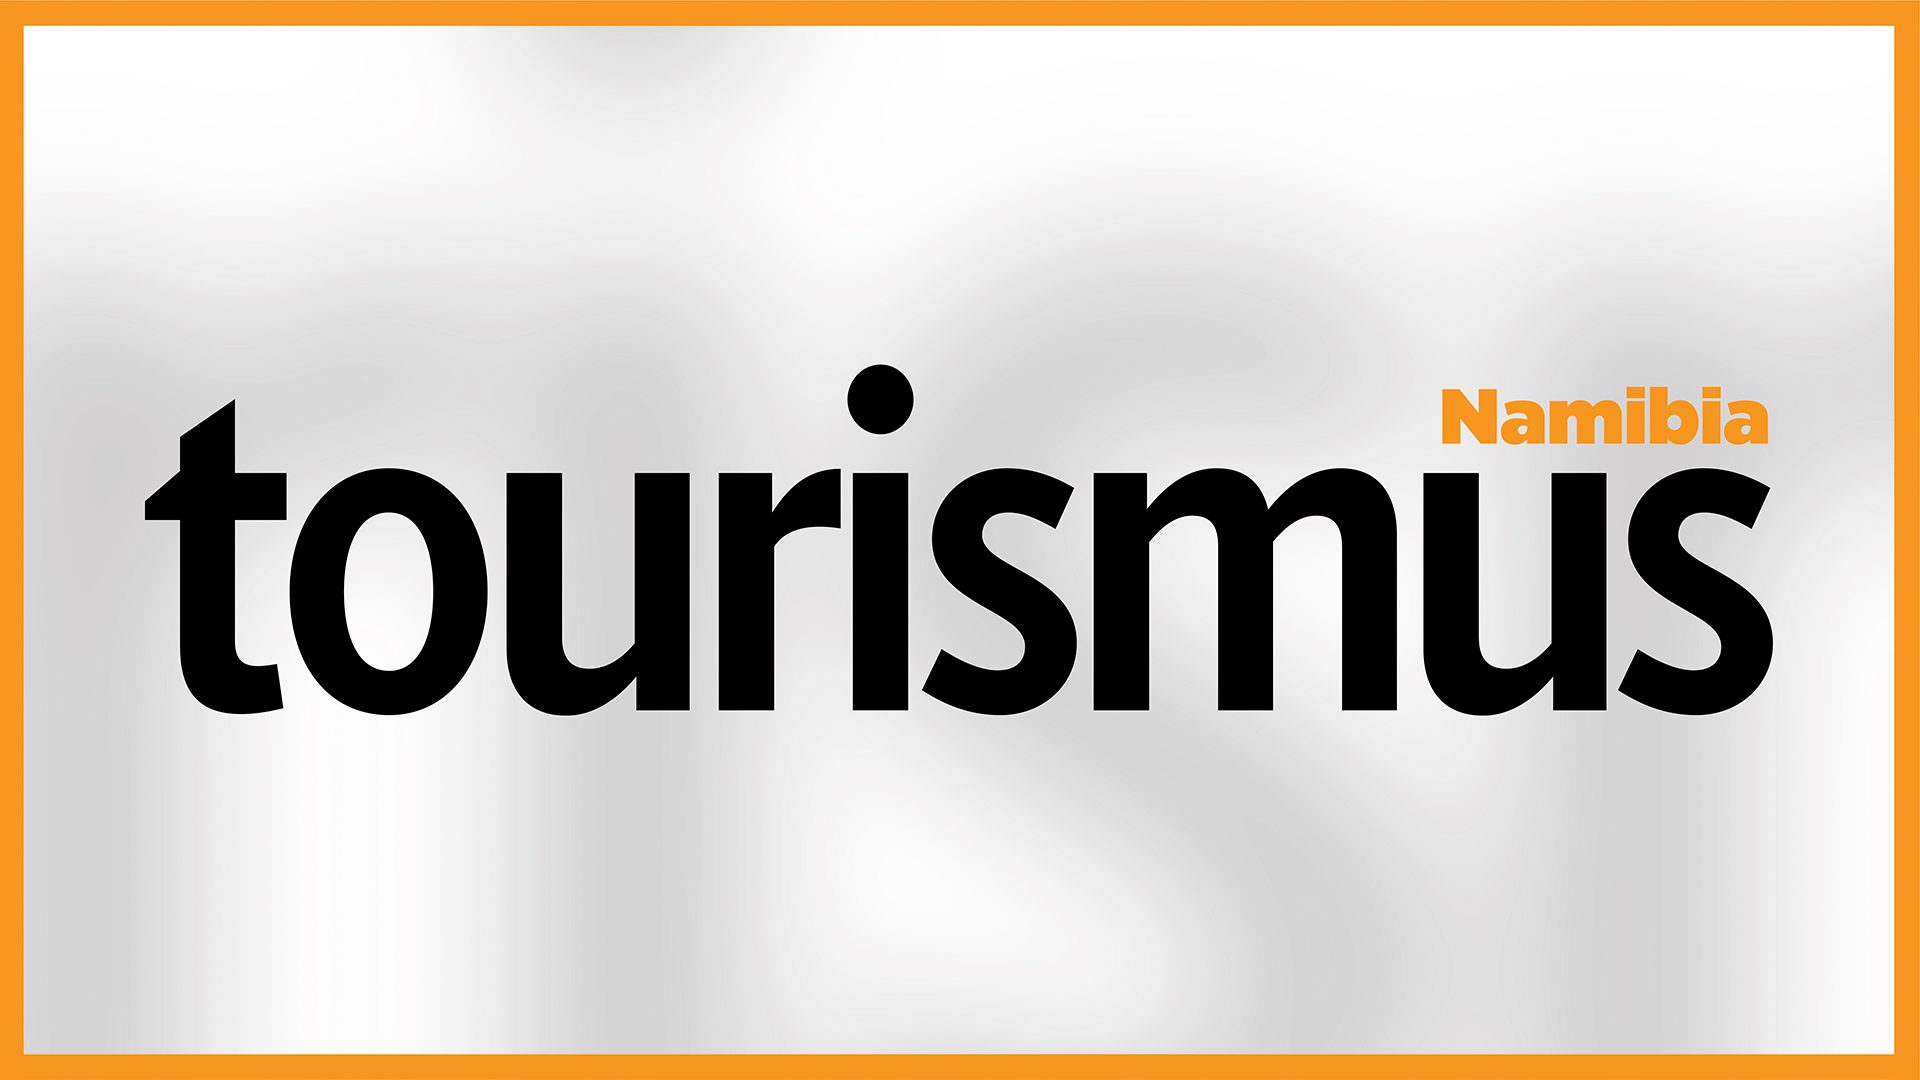 Tourismus Namibia (English) - 31 October 2021